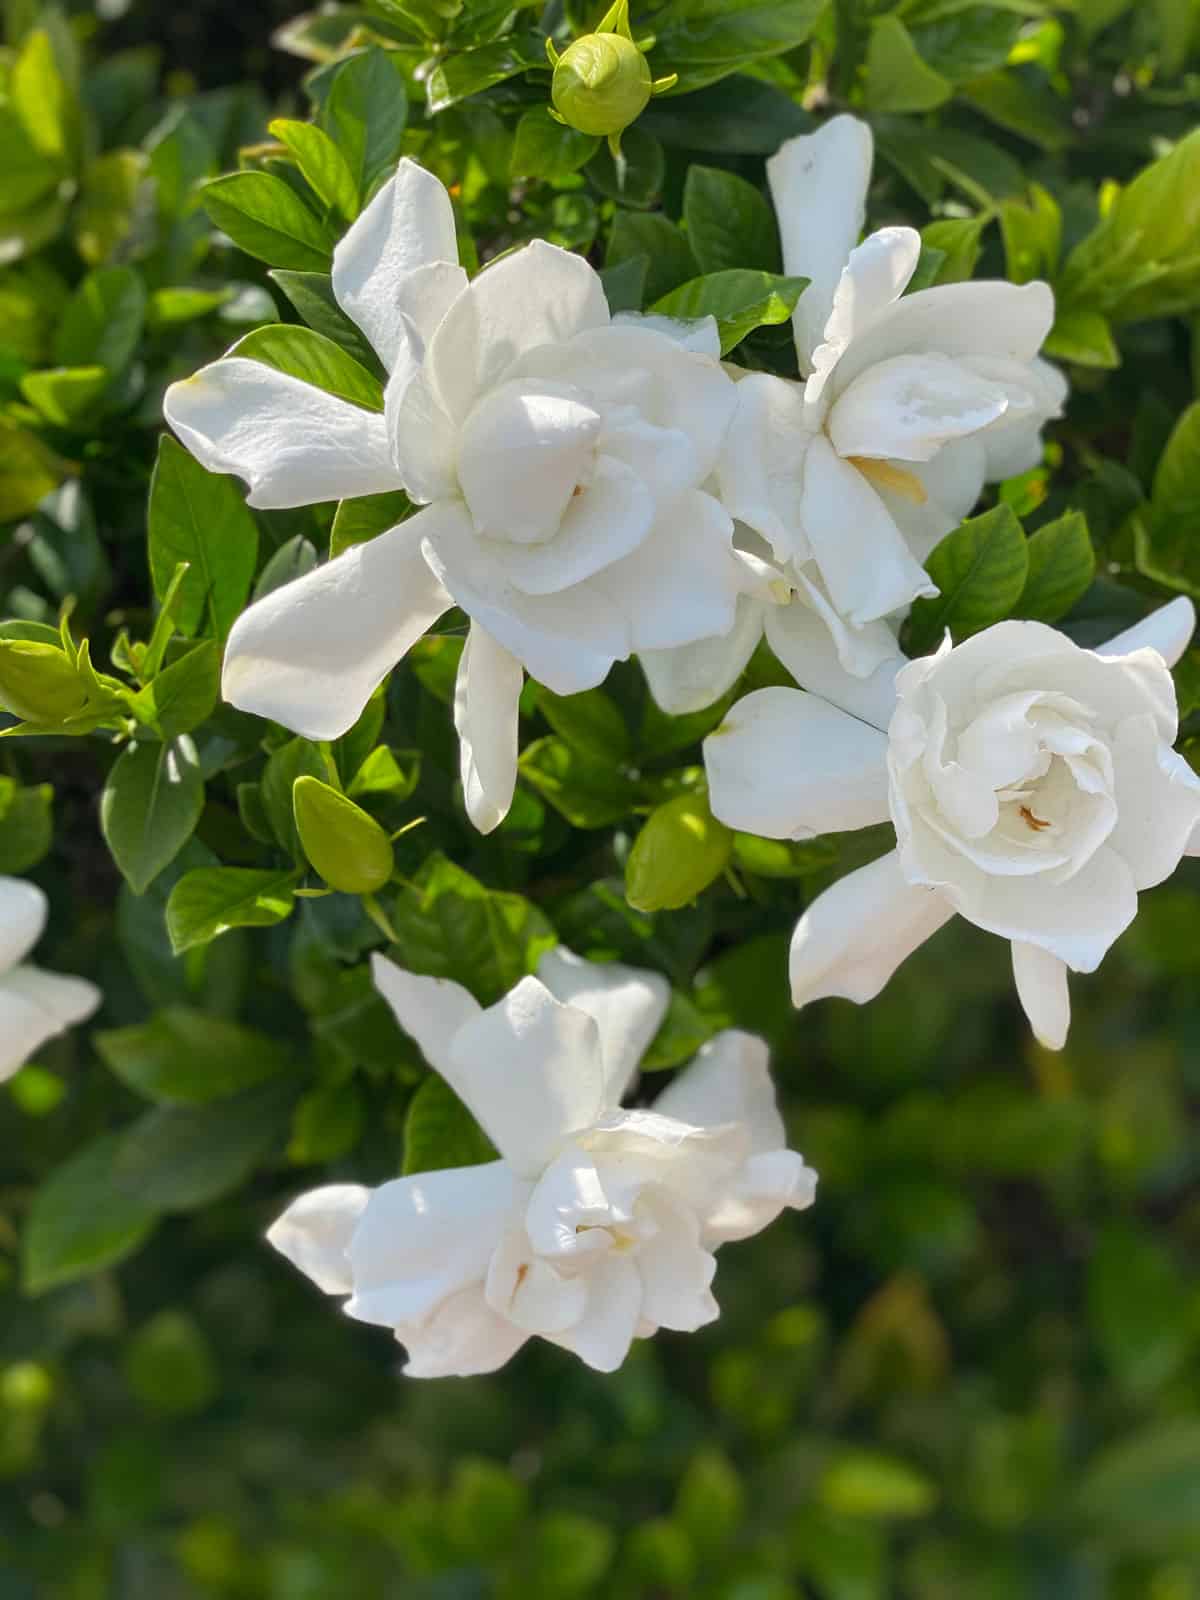 Bright white petals of Gardenia plant